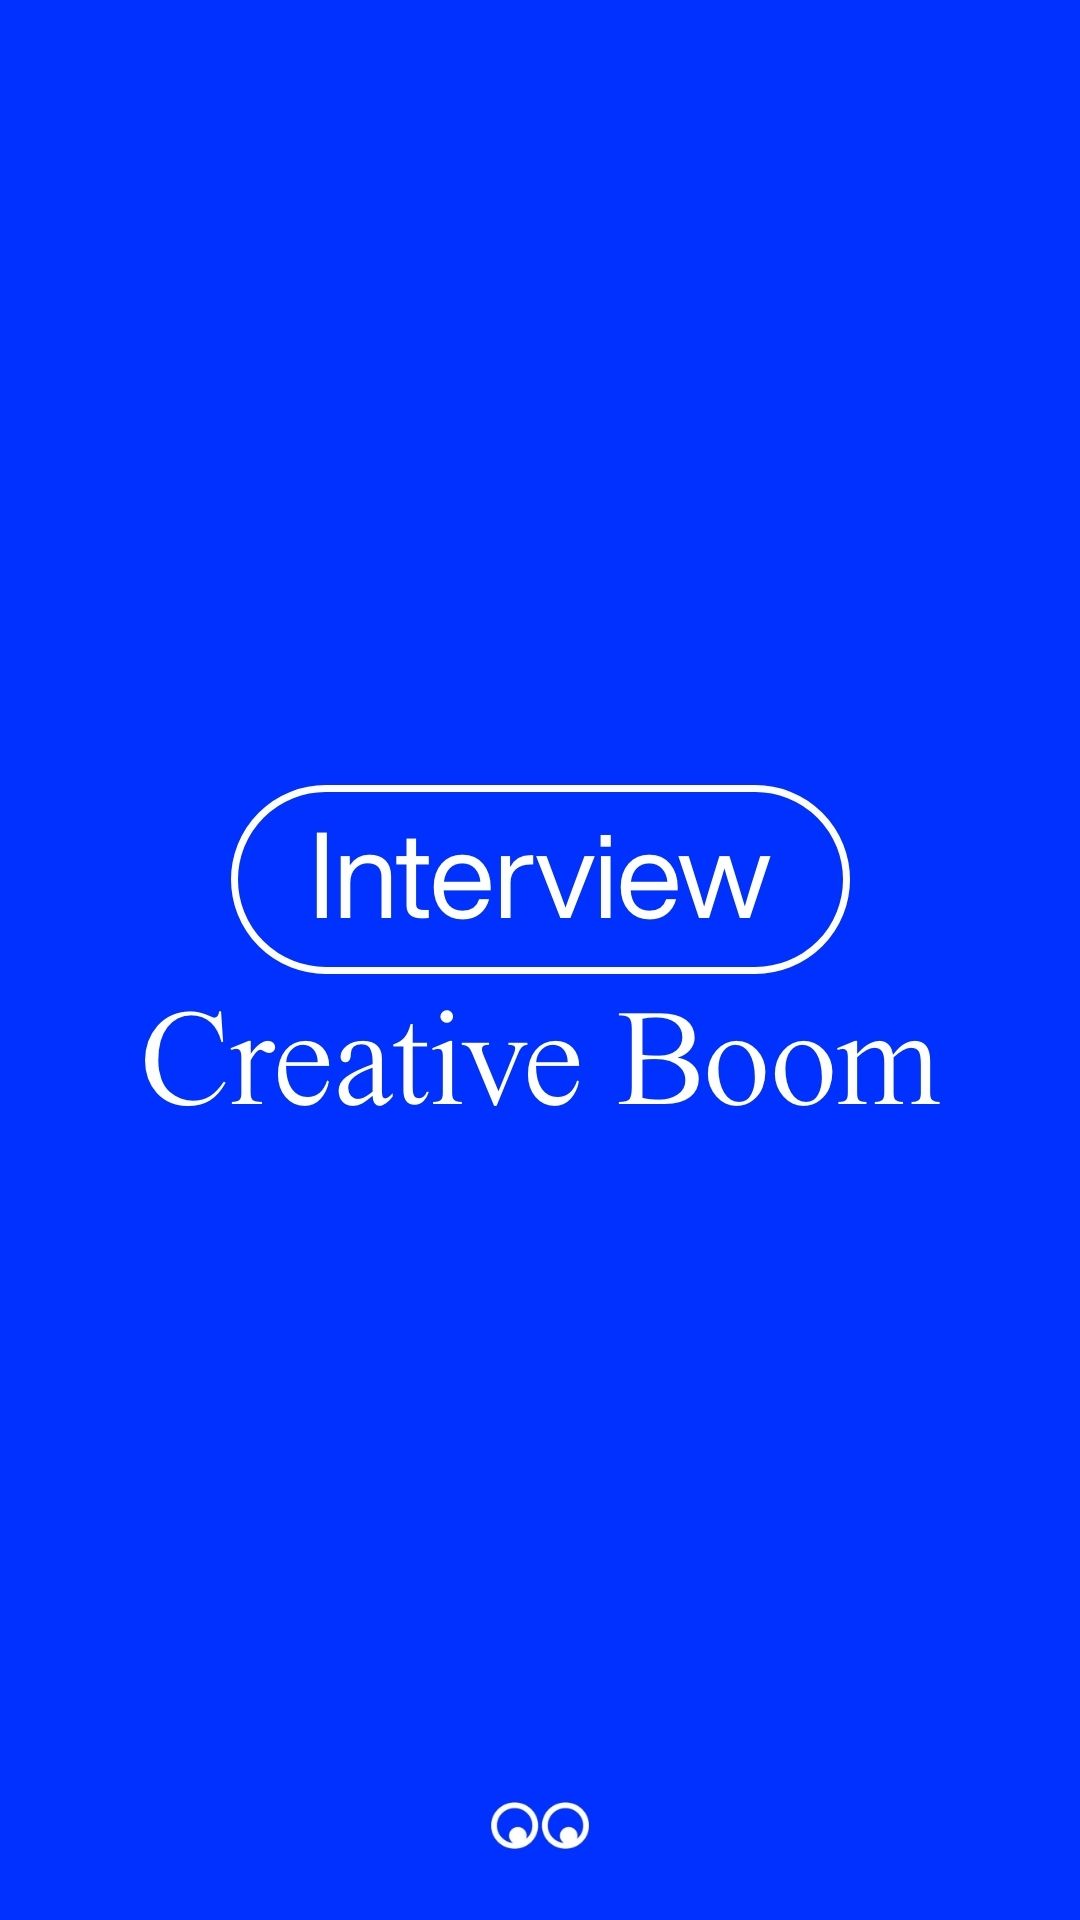 Full Studio Feature - Creative Boom